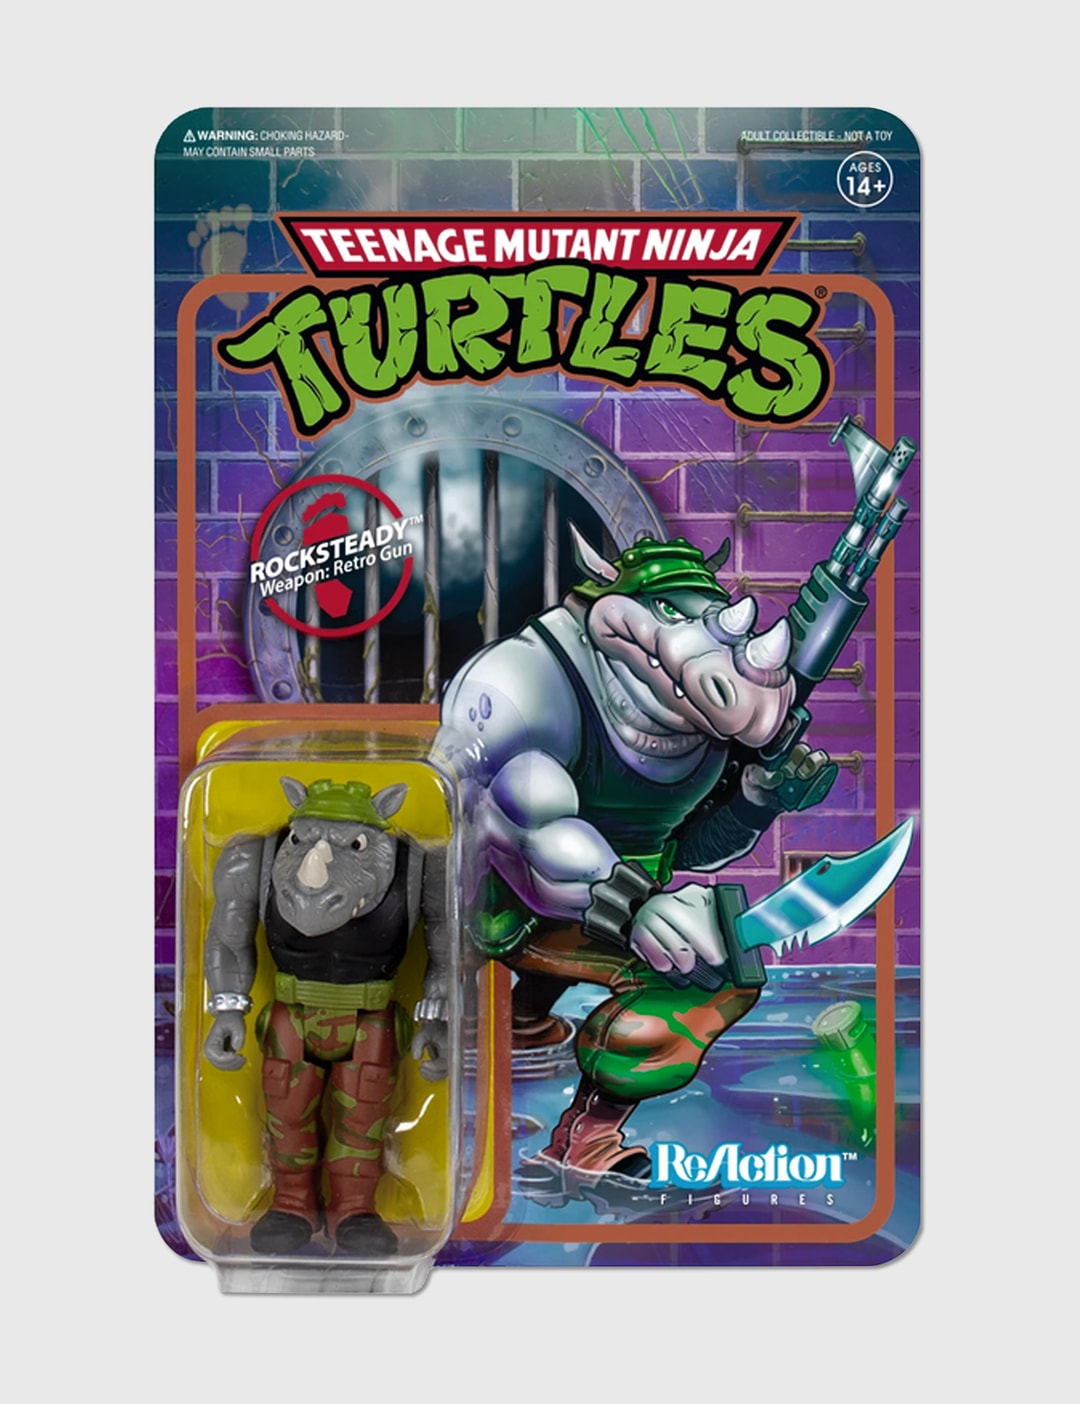 Adult Mutant Ninja Turtles T-Shirt - The Shirt List